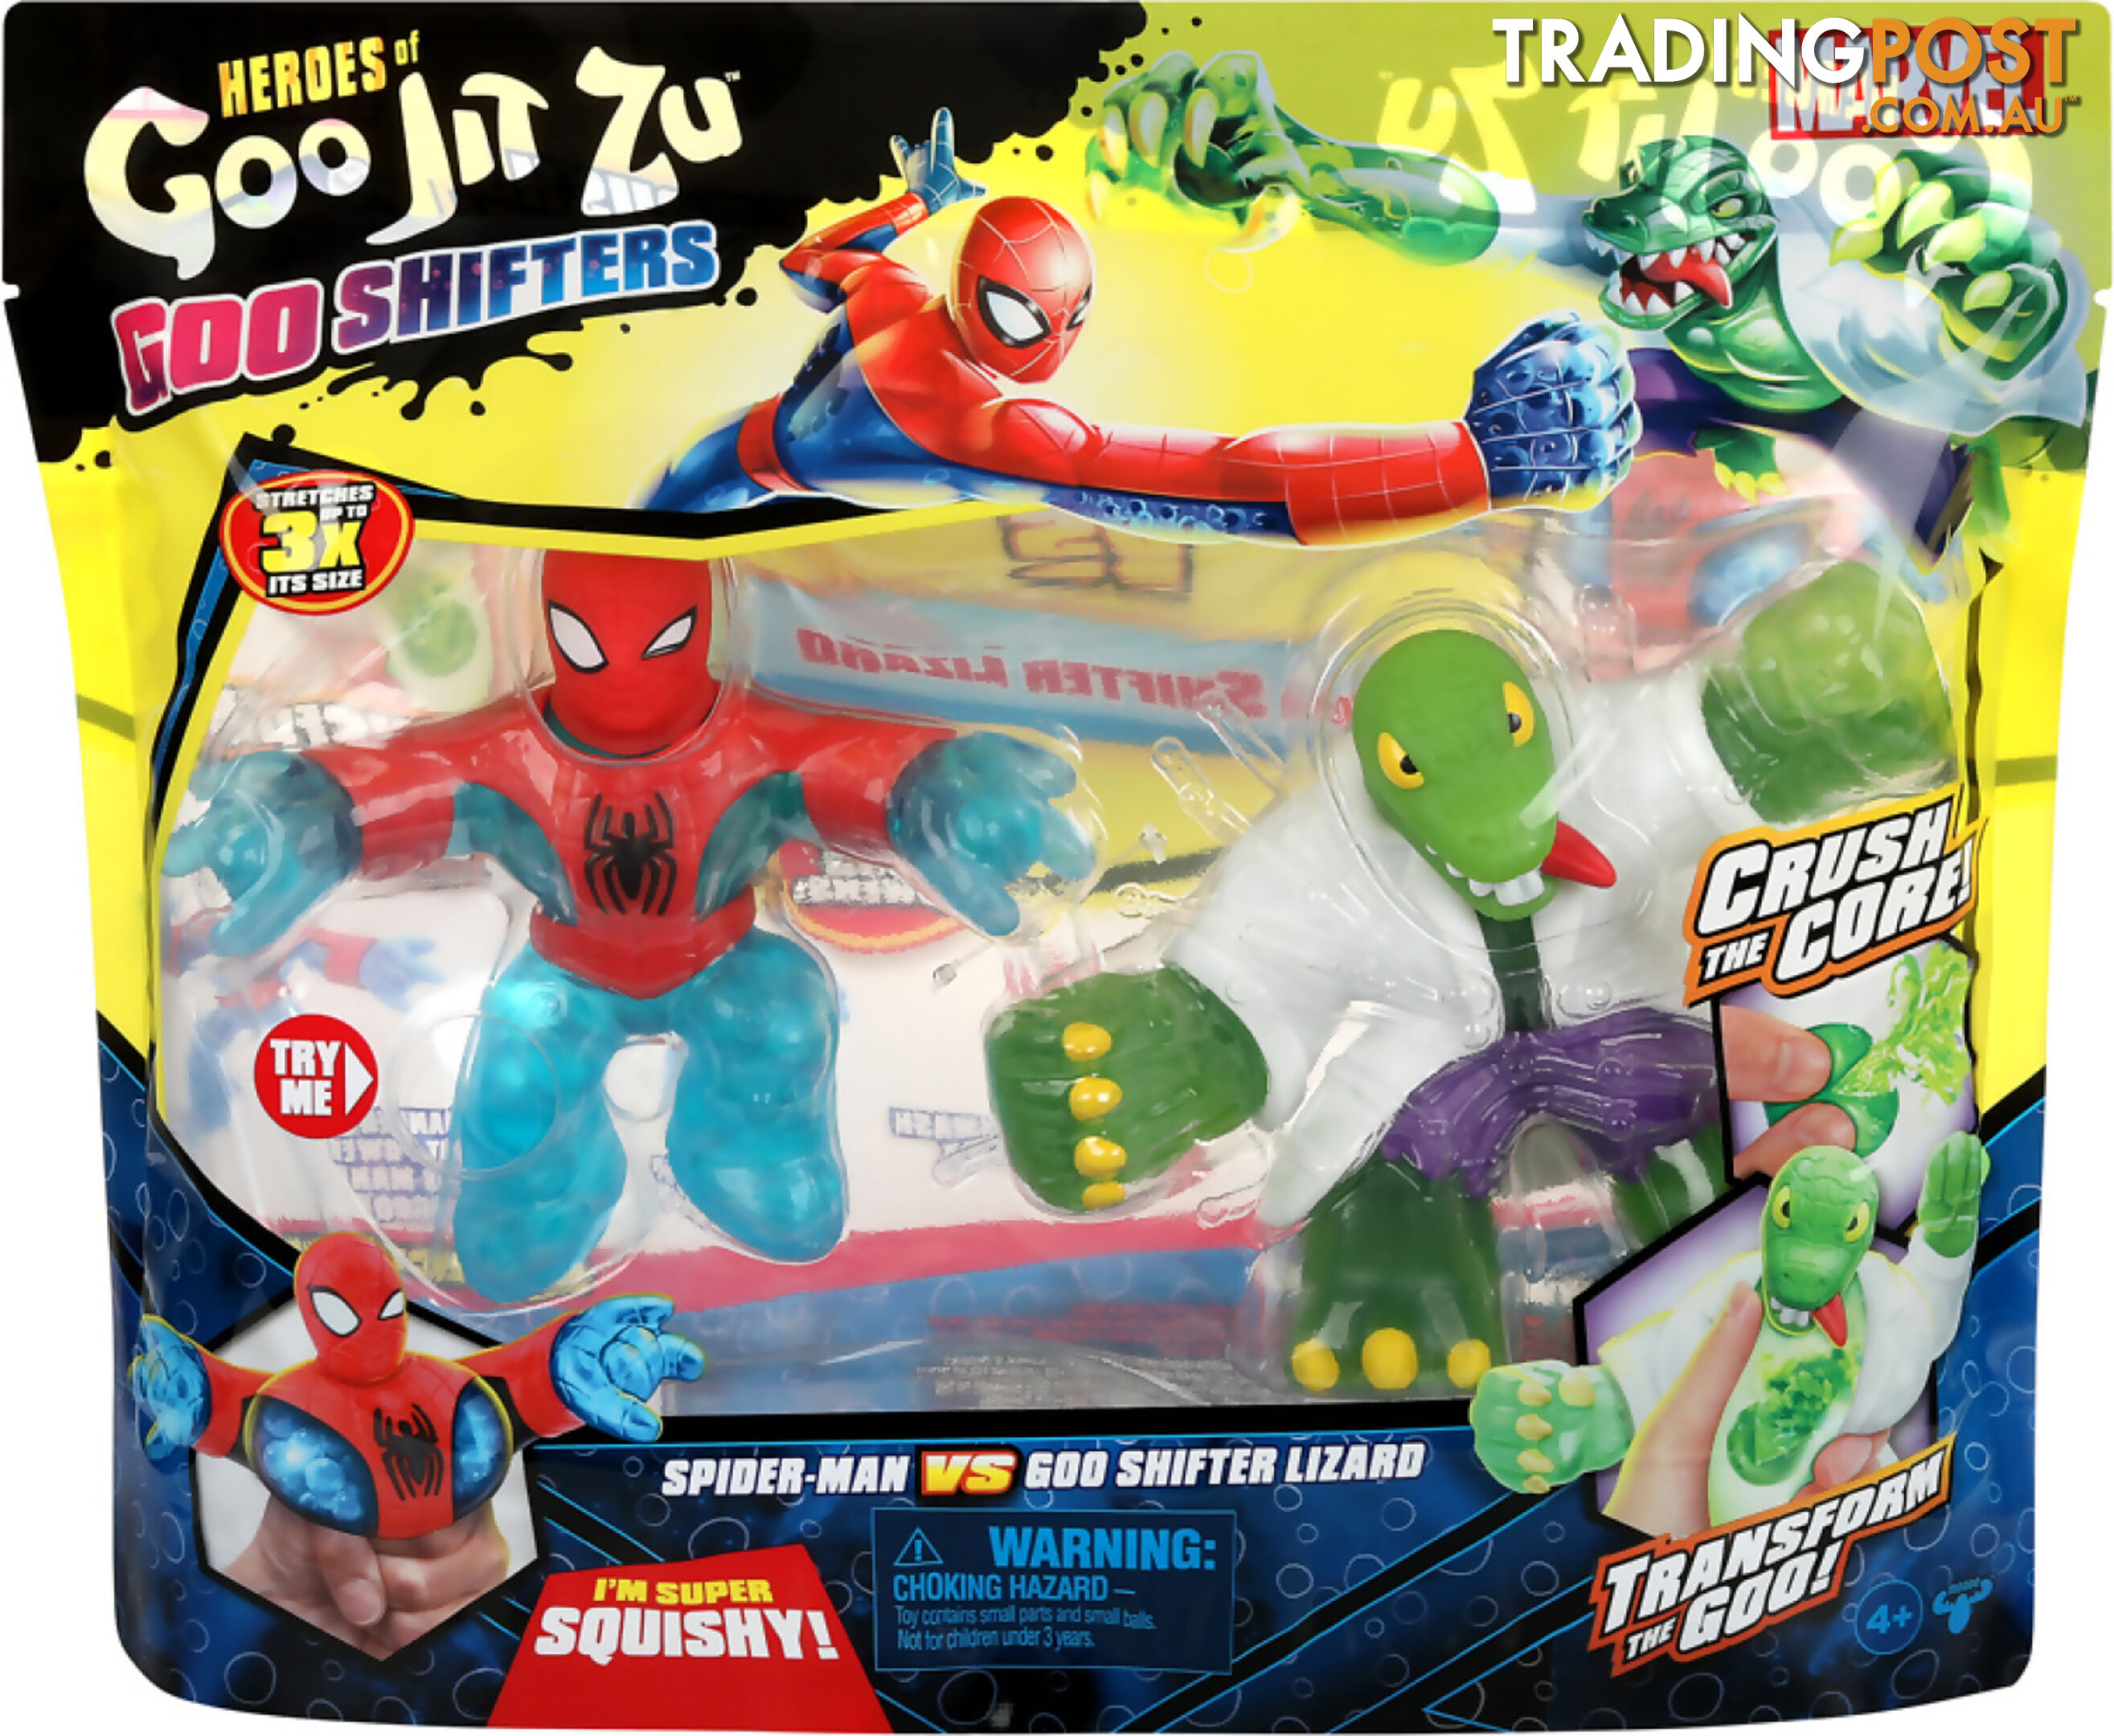 Heroes Of Goo Jit Zu - Marvel Goo Shifters Spider-man Vs Goo Shifter Lizard - Mj42582 - 630996425824